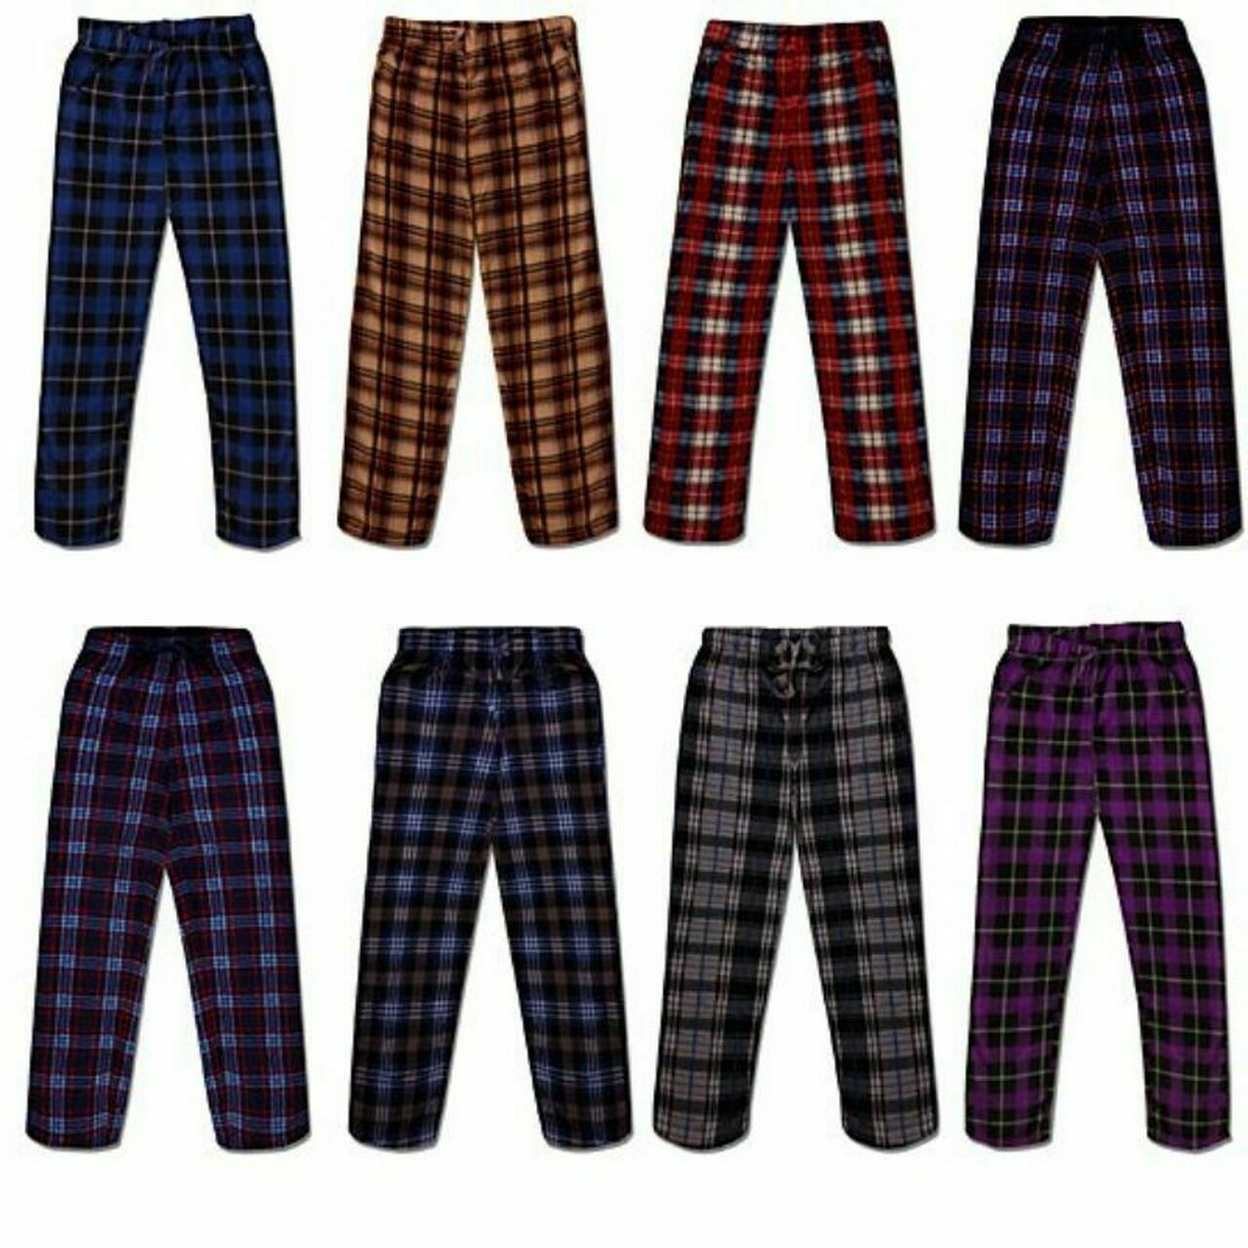 4-Pack: Men's Ultra Soft Cozy Flannel Fleece Plaid Pajama Sleep Bottom Lounge Pants - X-large